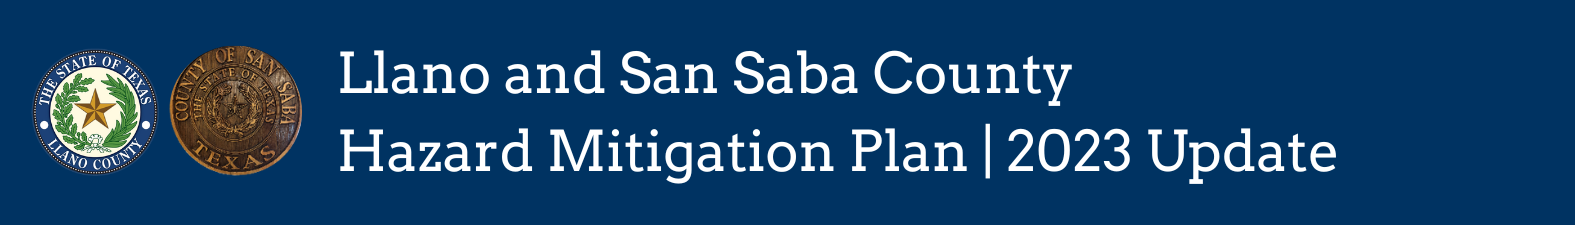 Llano and San Saba County Hazard Mitigation Plan Update